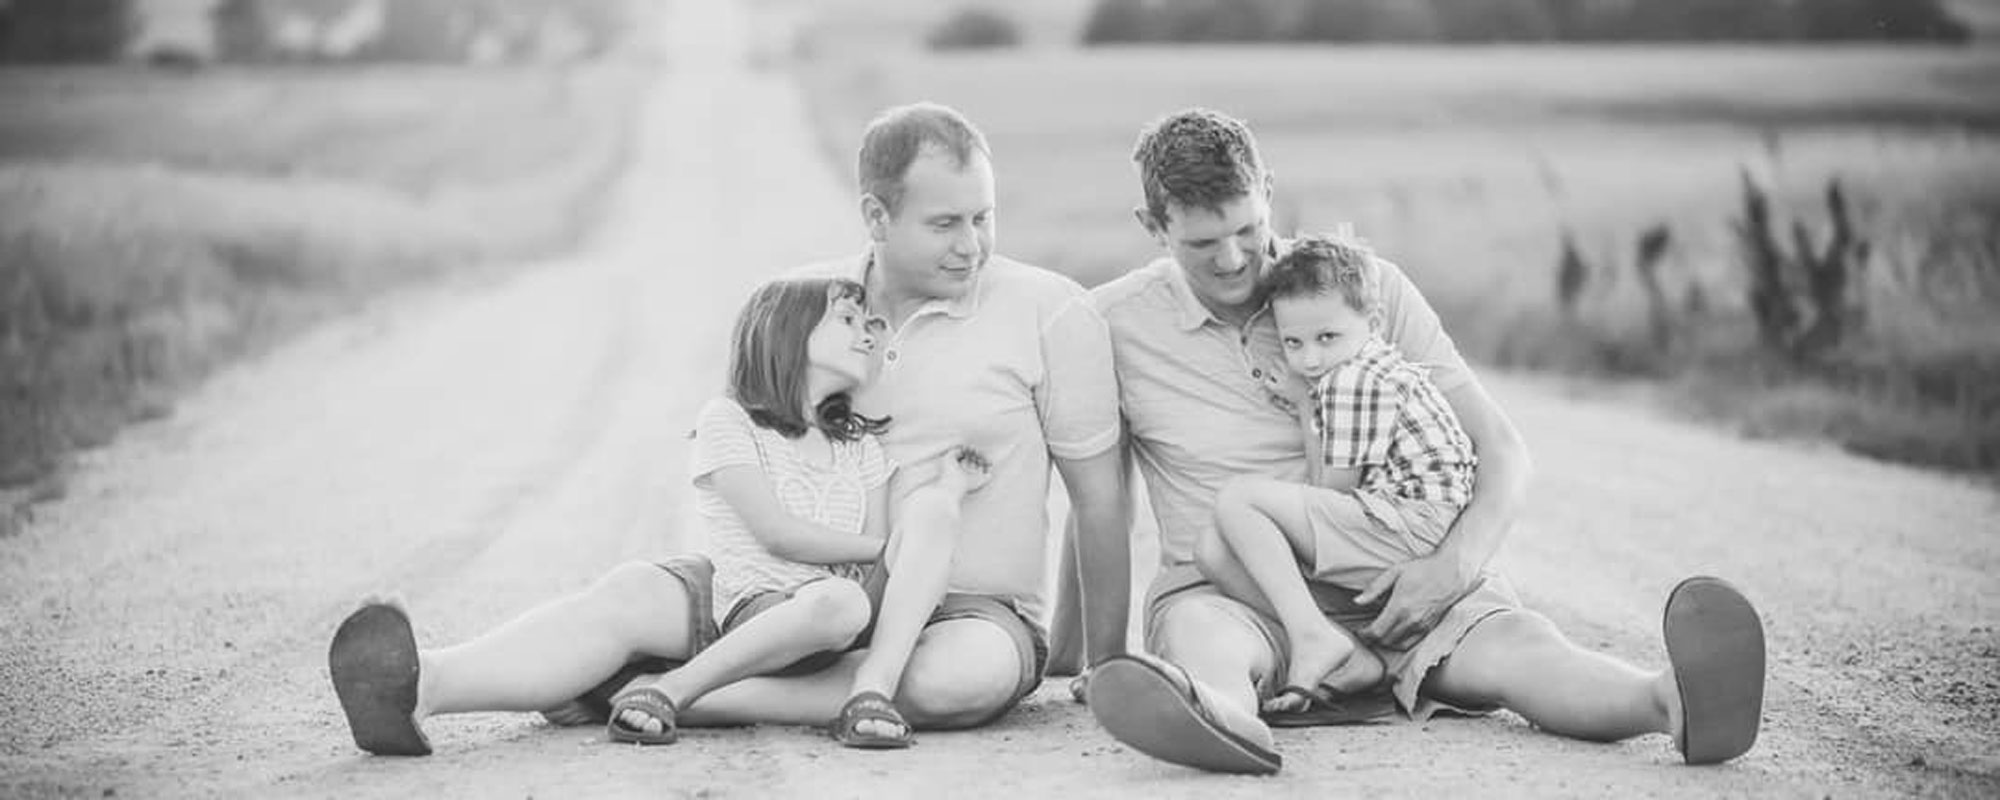 my-adoption-experiences-as-a-same-sex-dad